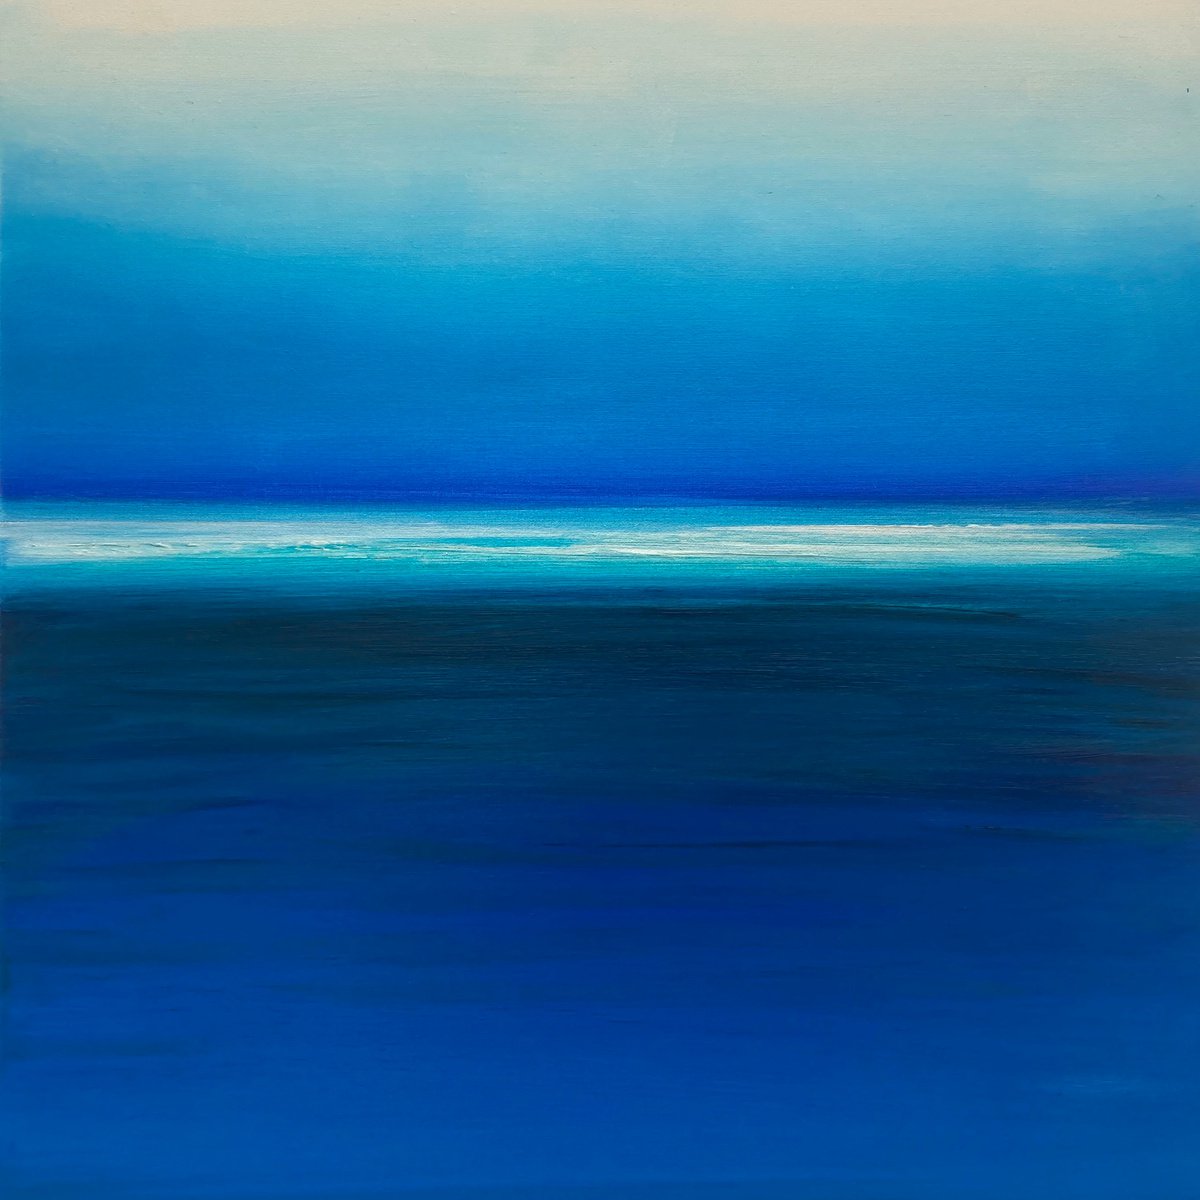 Across the Silver Waves by Julia Everett